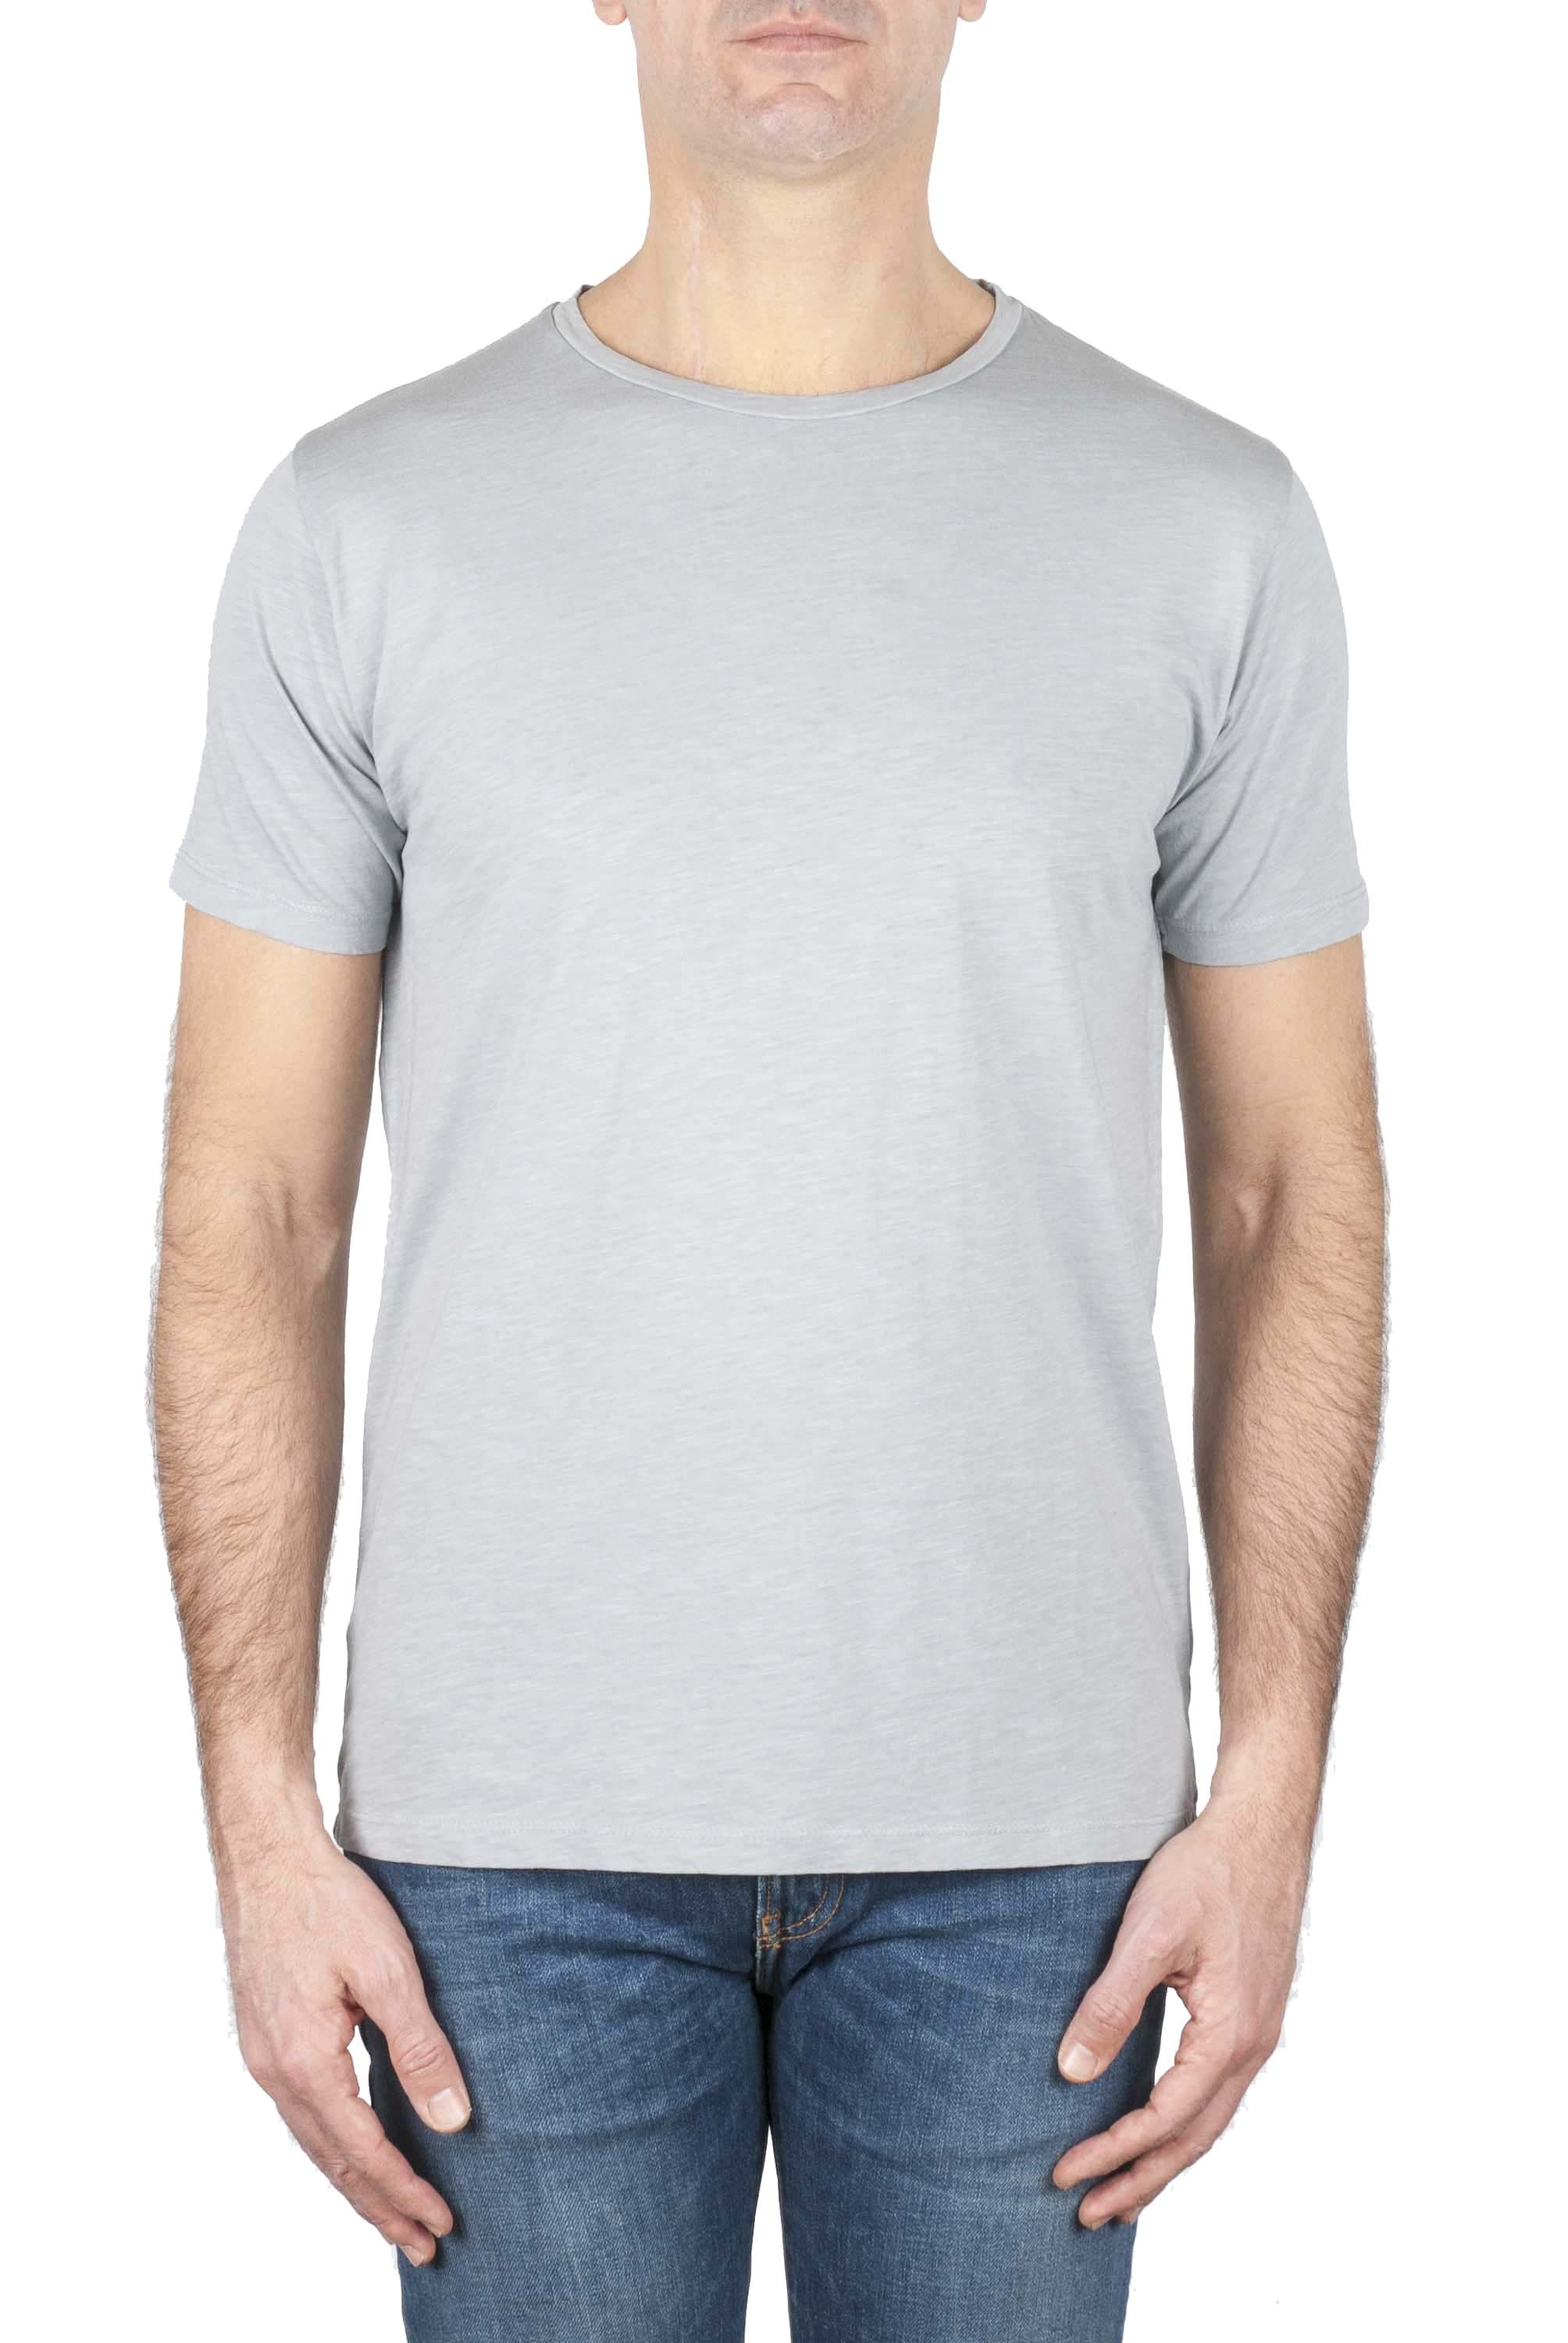 SBU 01639 Flamed cotton scoop neck t-shirt pearl grey 01